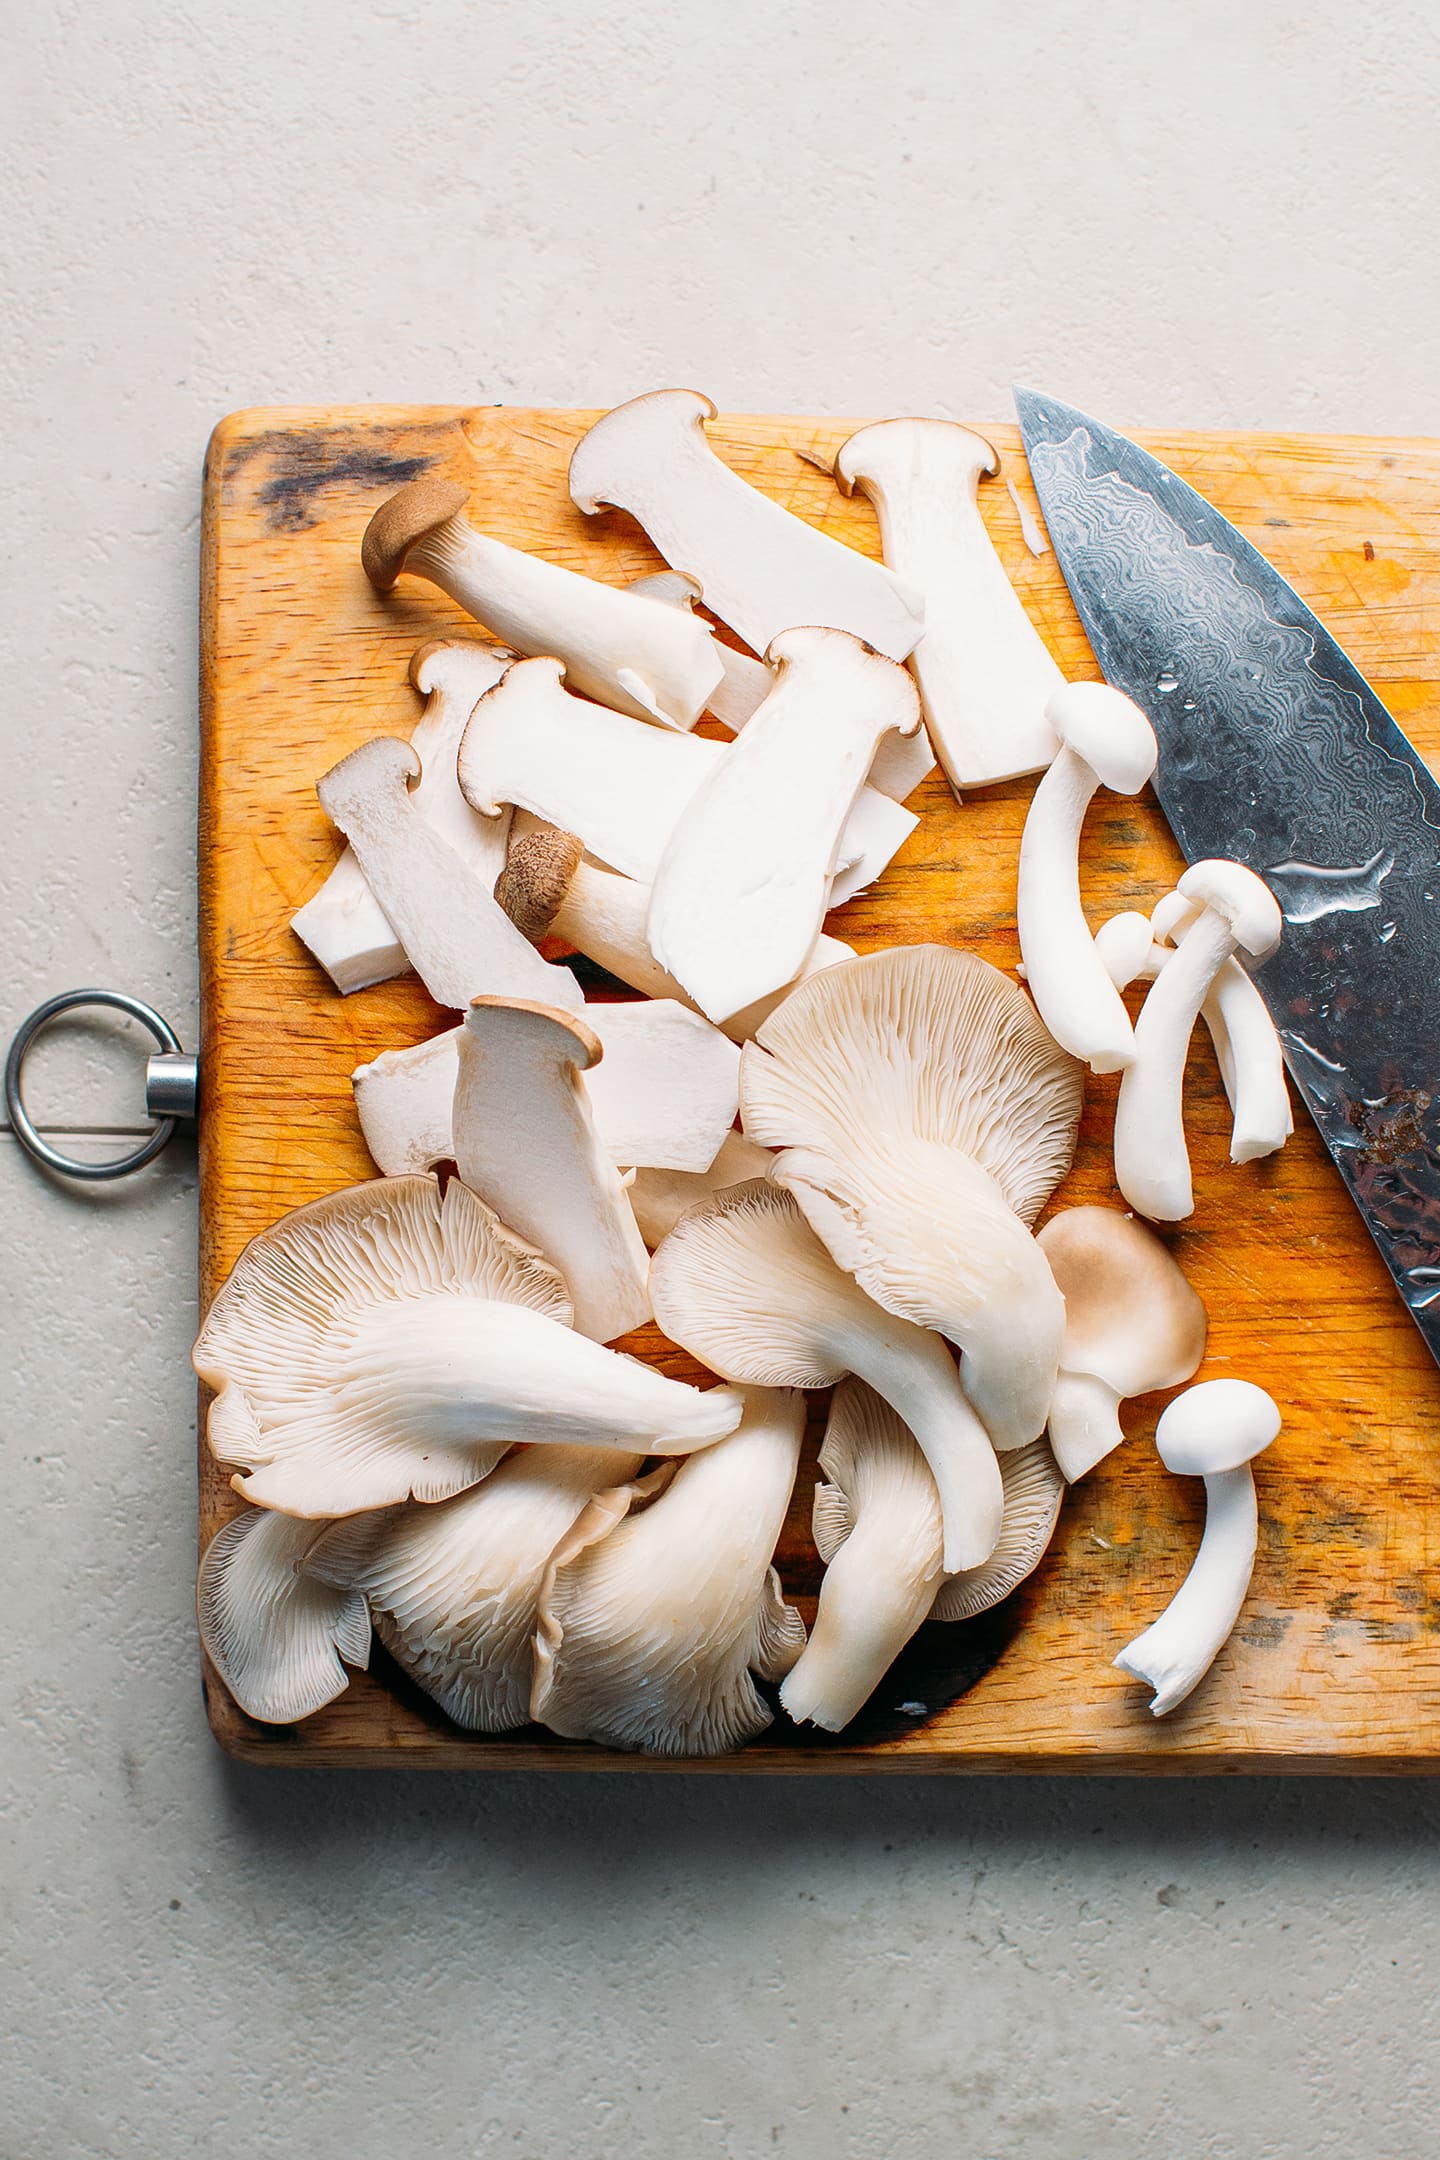 Easy Crispy Mushroom Tempura (Vegan + Gluten-Free)